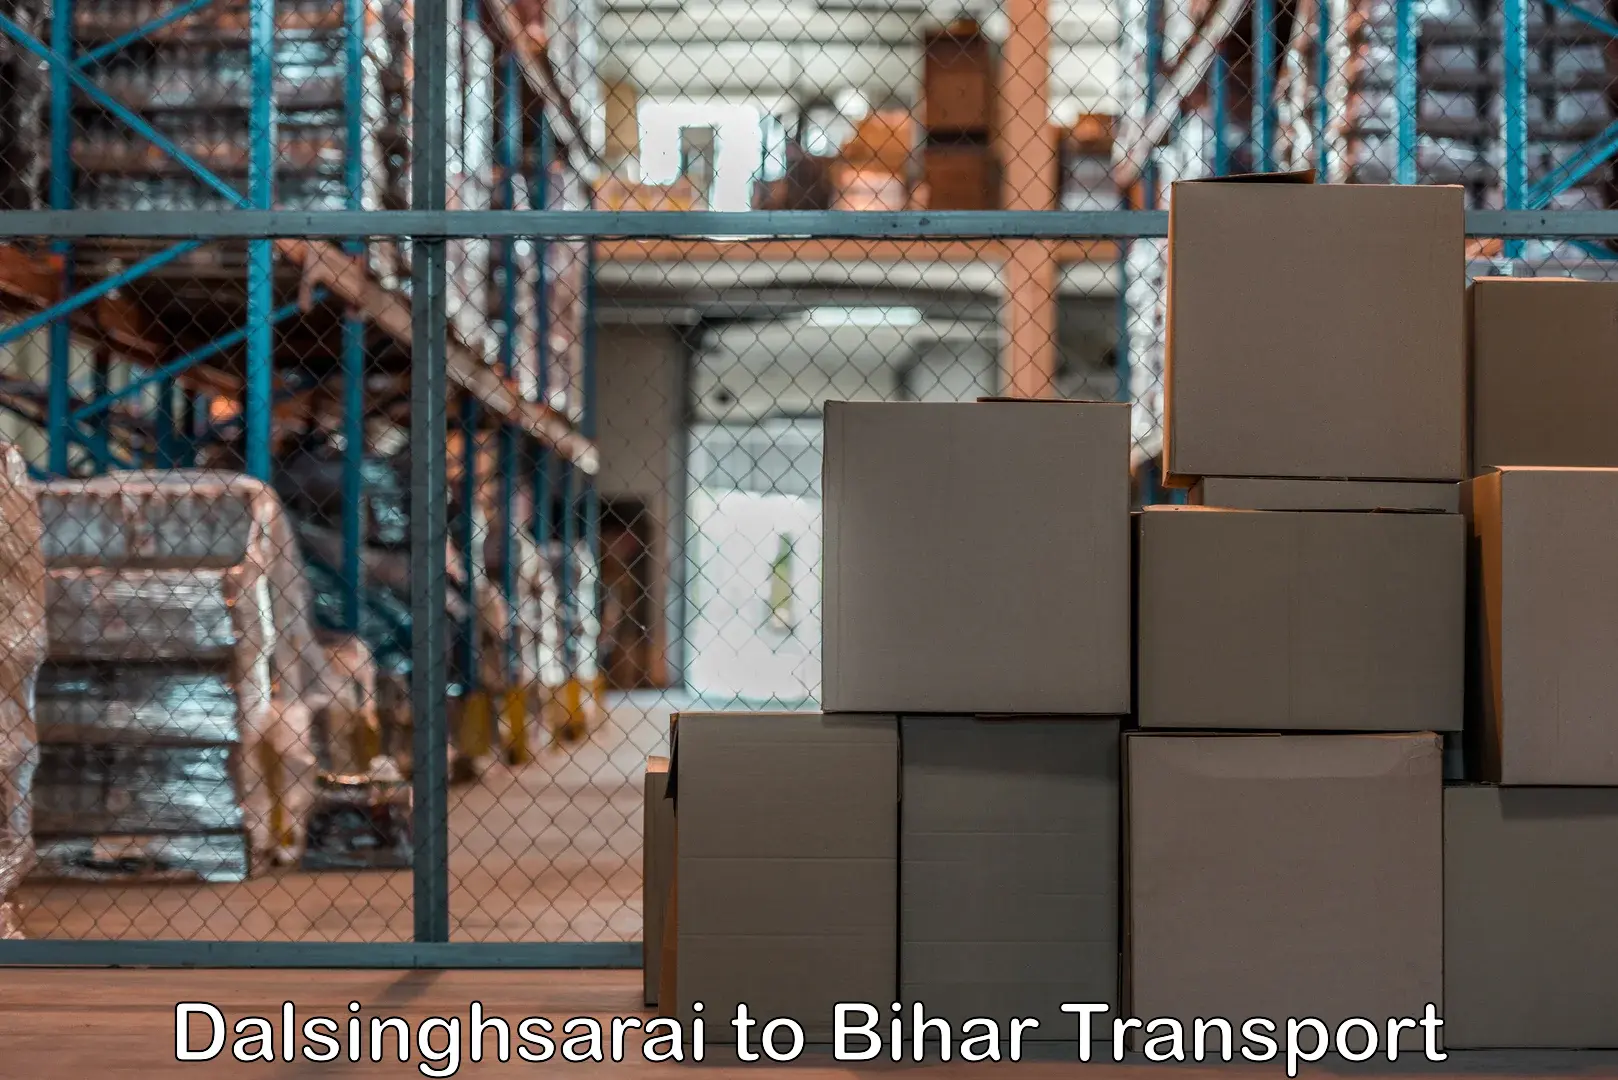 Transport in sharing Dalsinghsarai to Piro